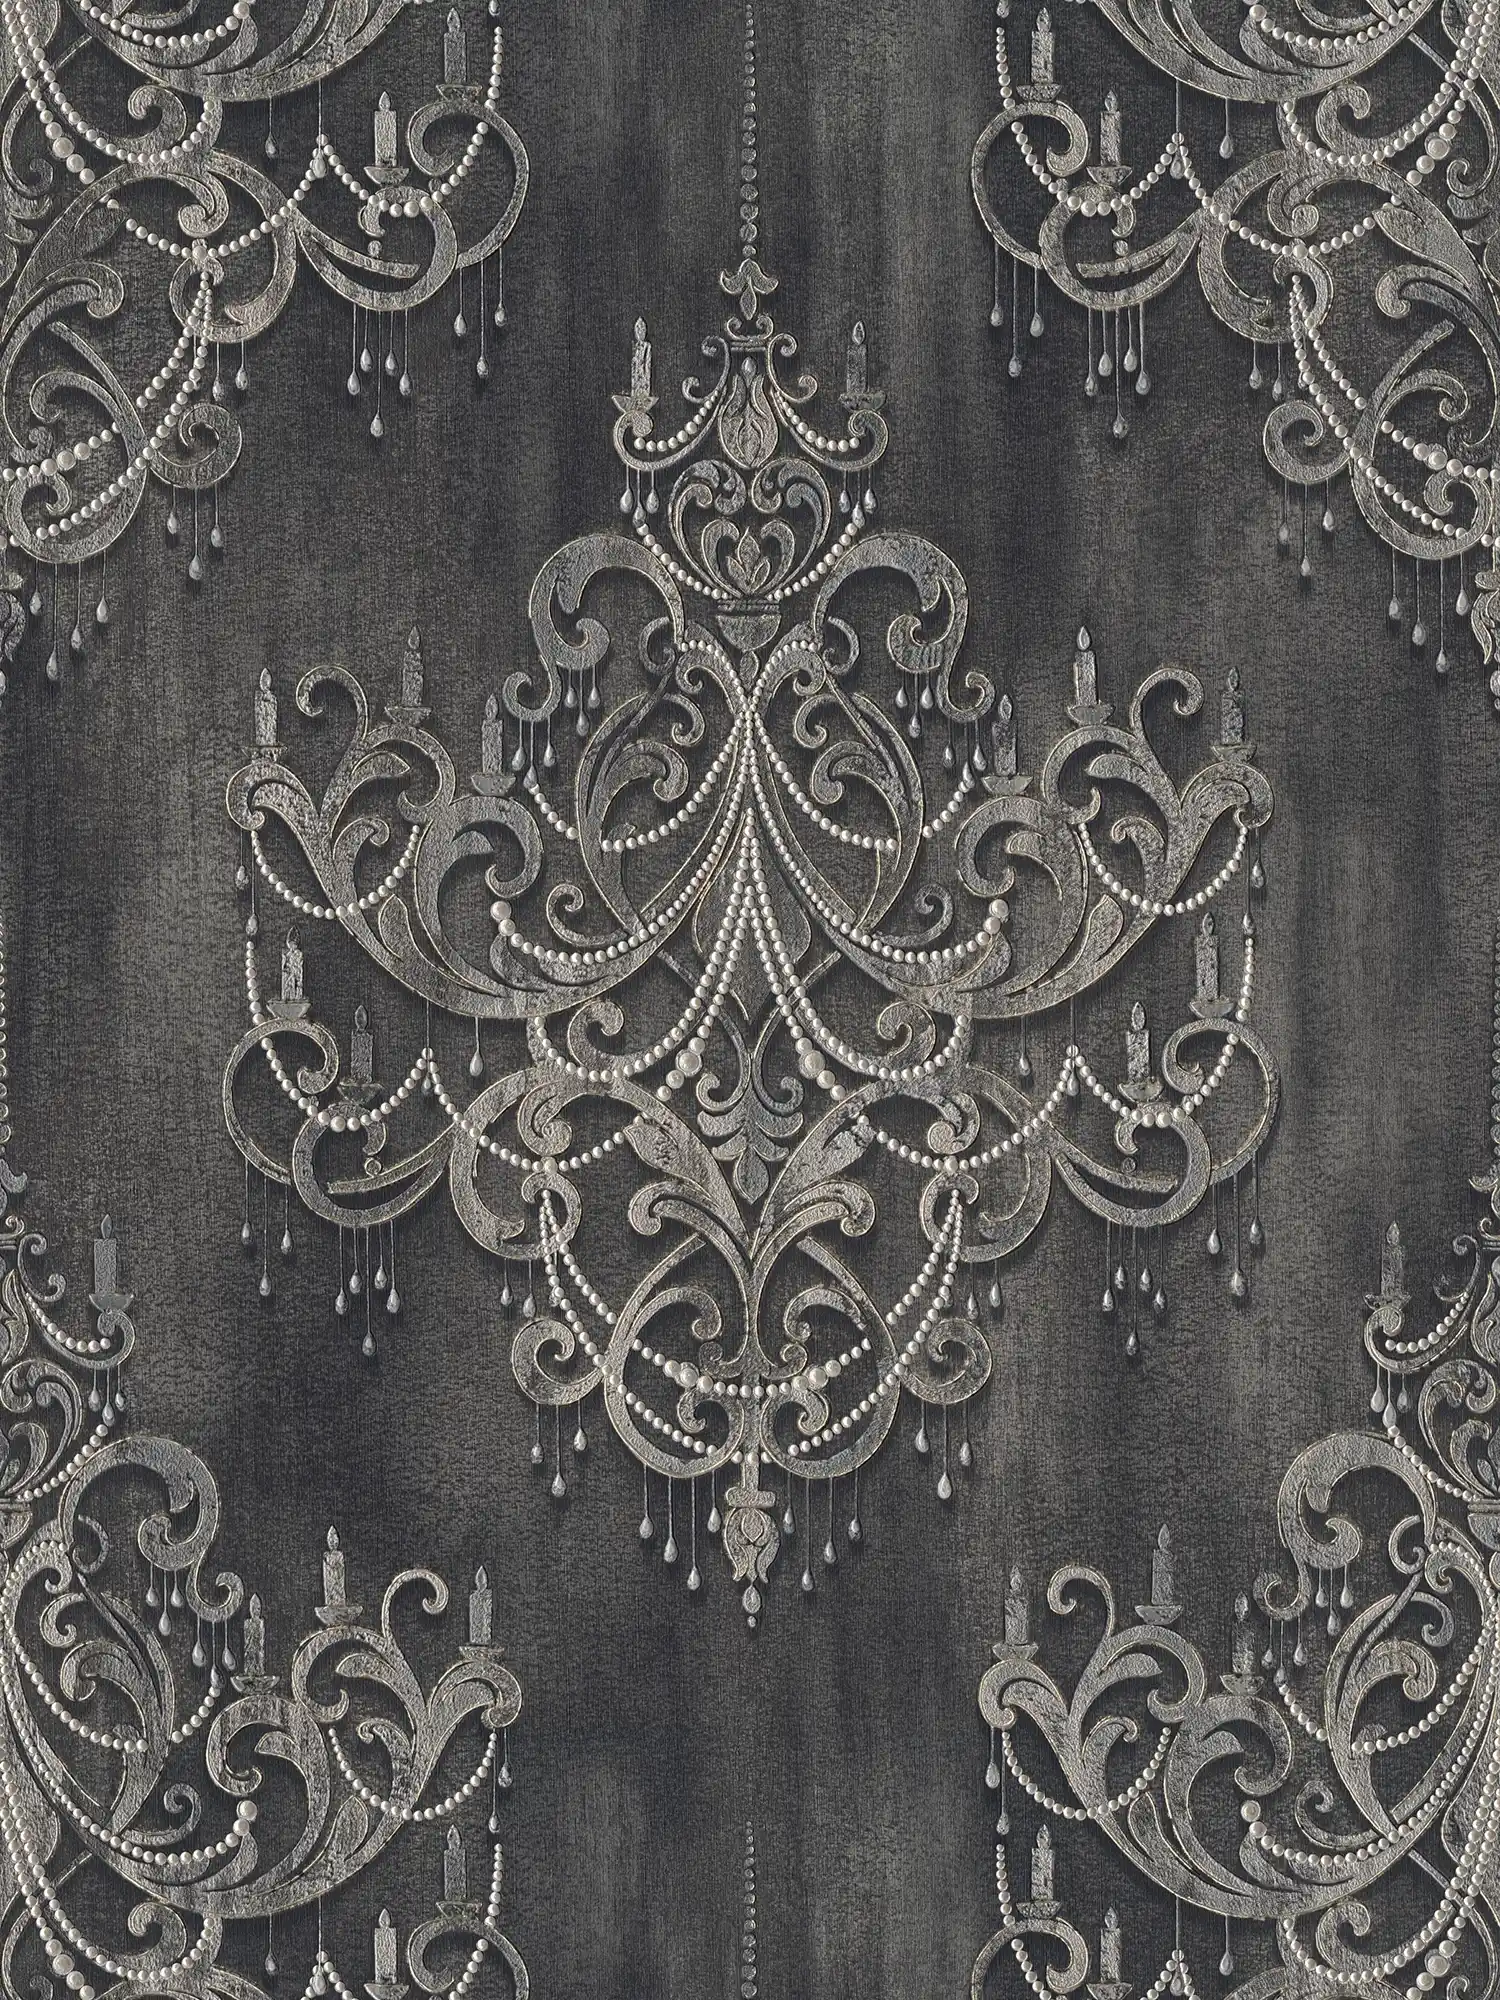 Black wallpaper beaded pattern, ornaments & metallic effect
